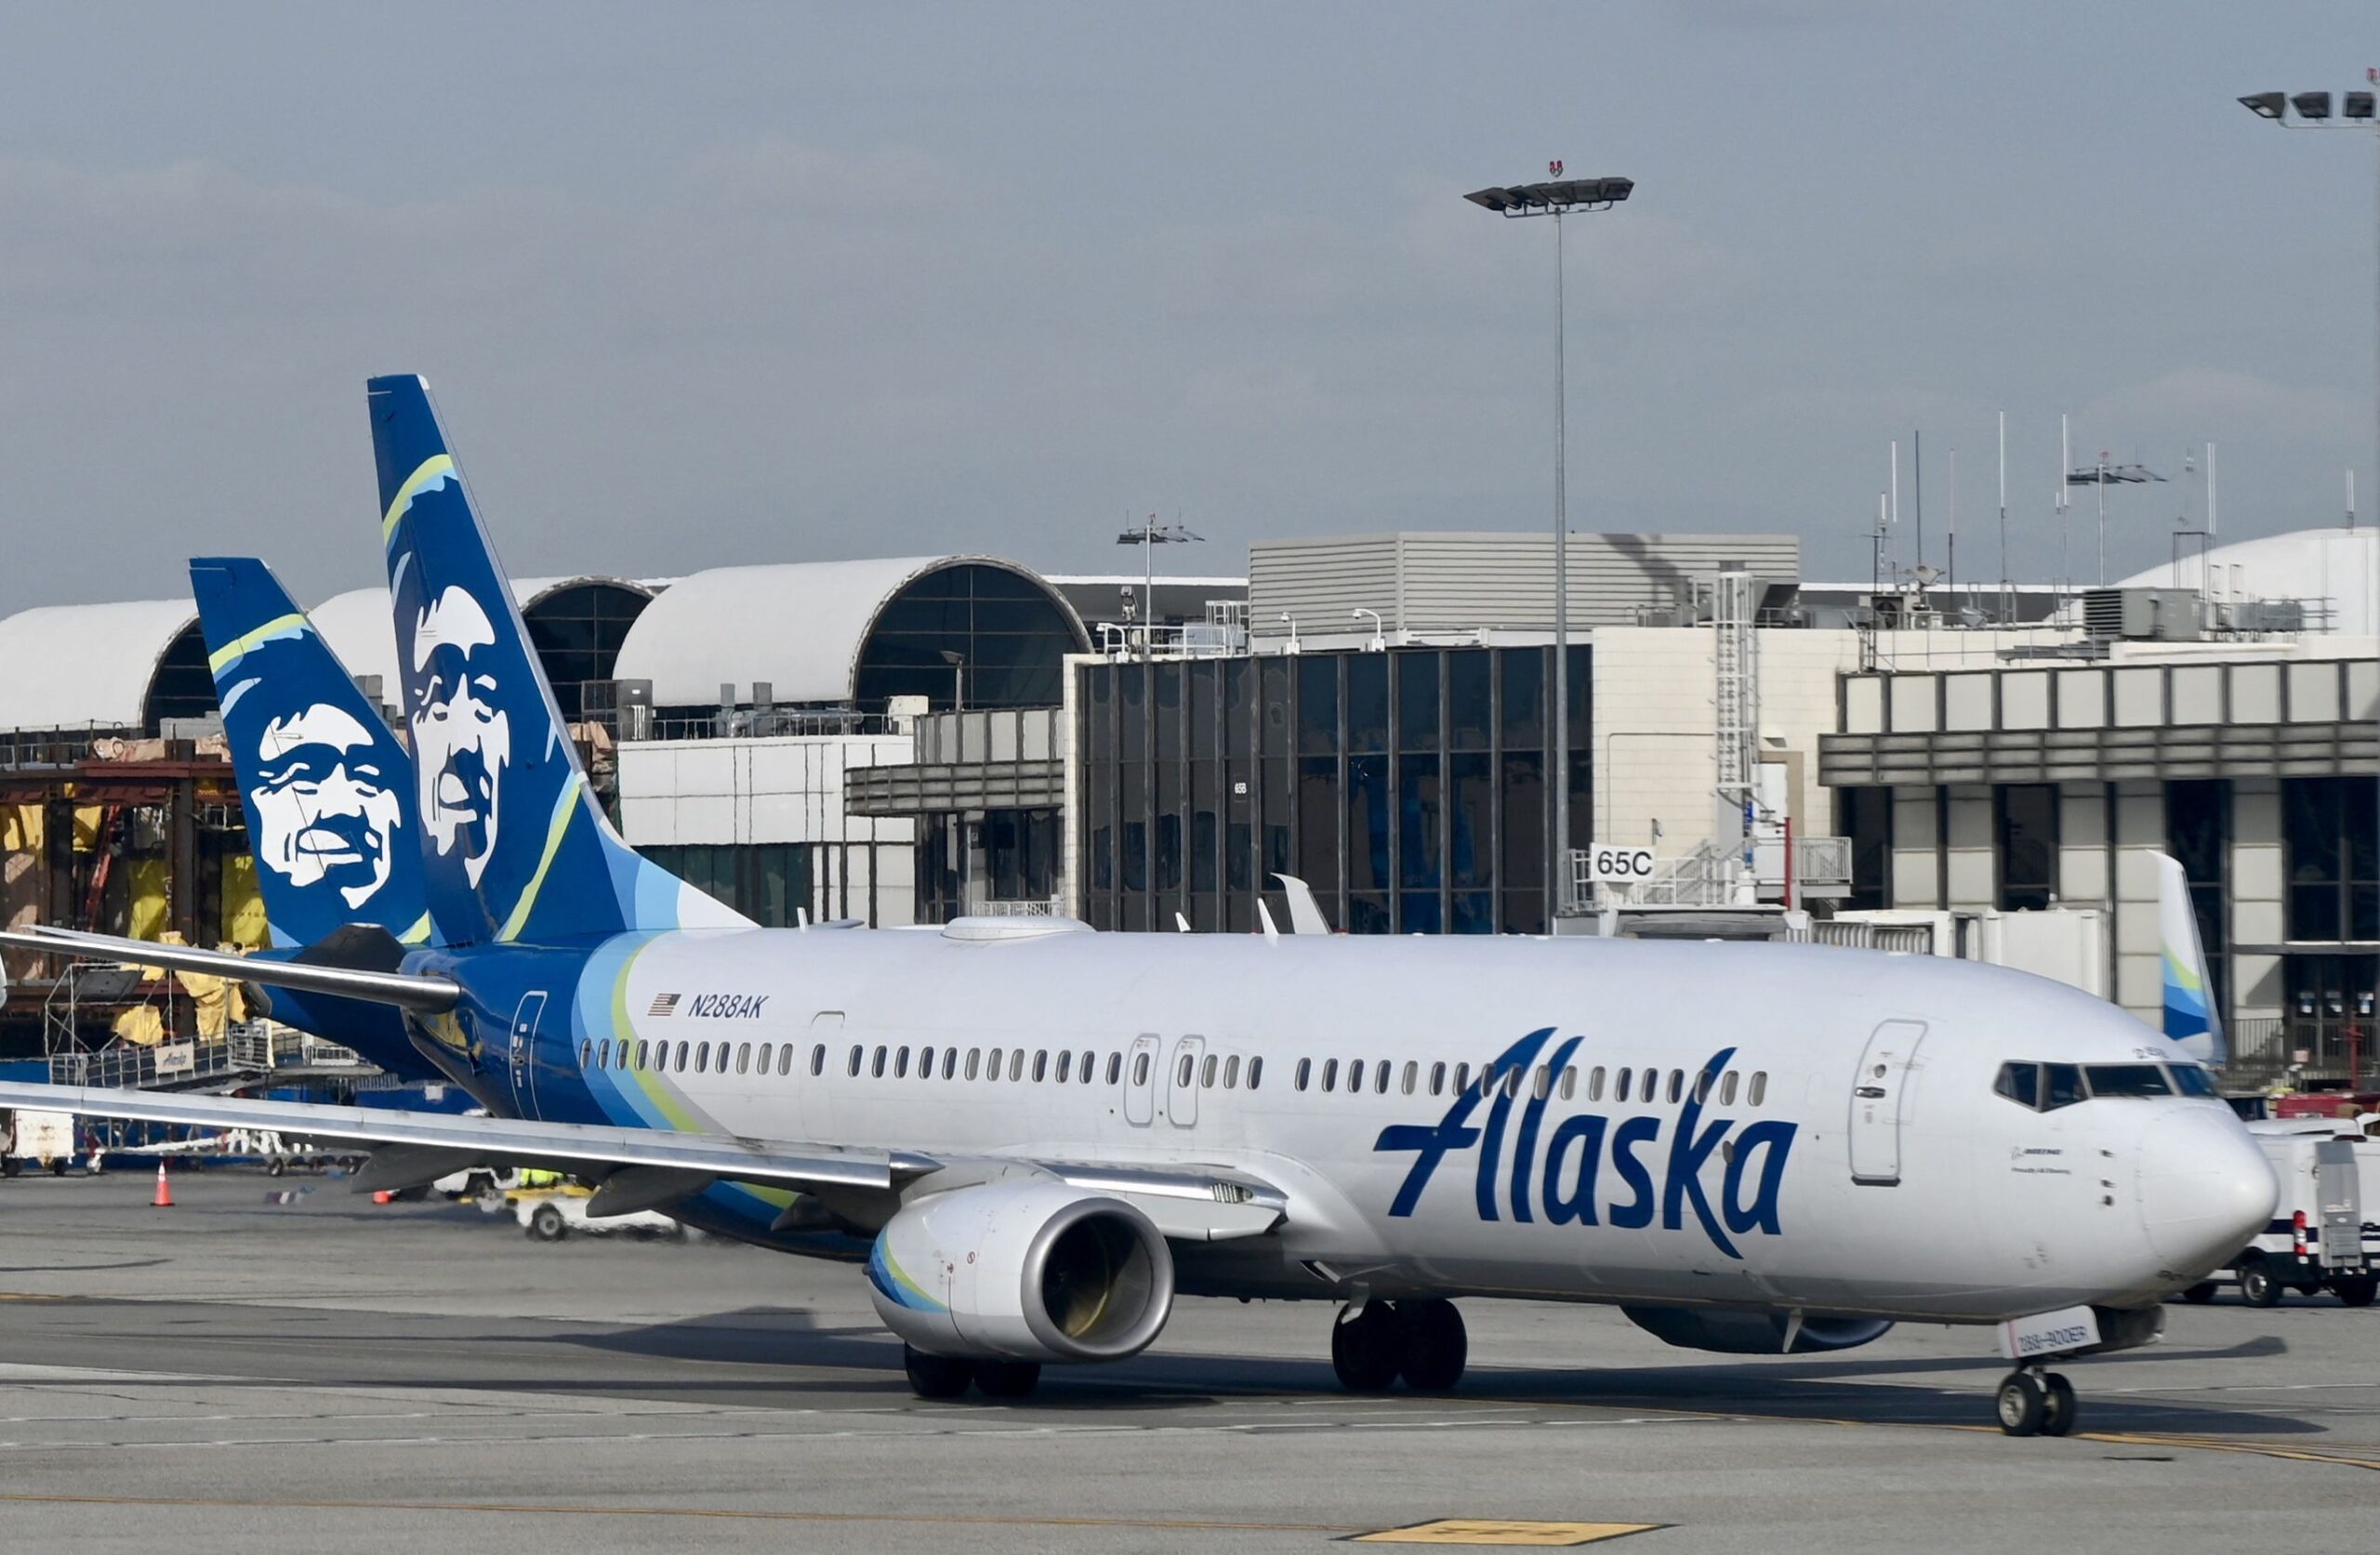 An Alaska Airlines pilot's alleged attempt to shut off engines mid-flight has aviation experts scru...